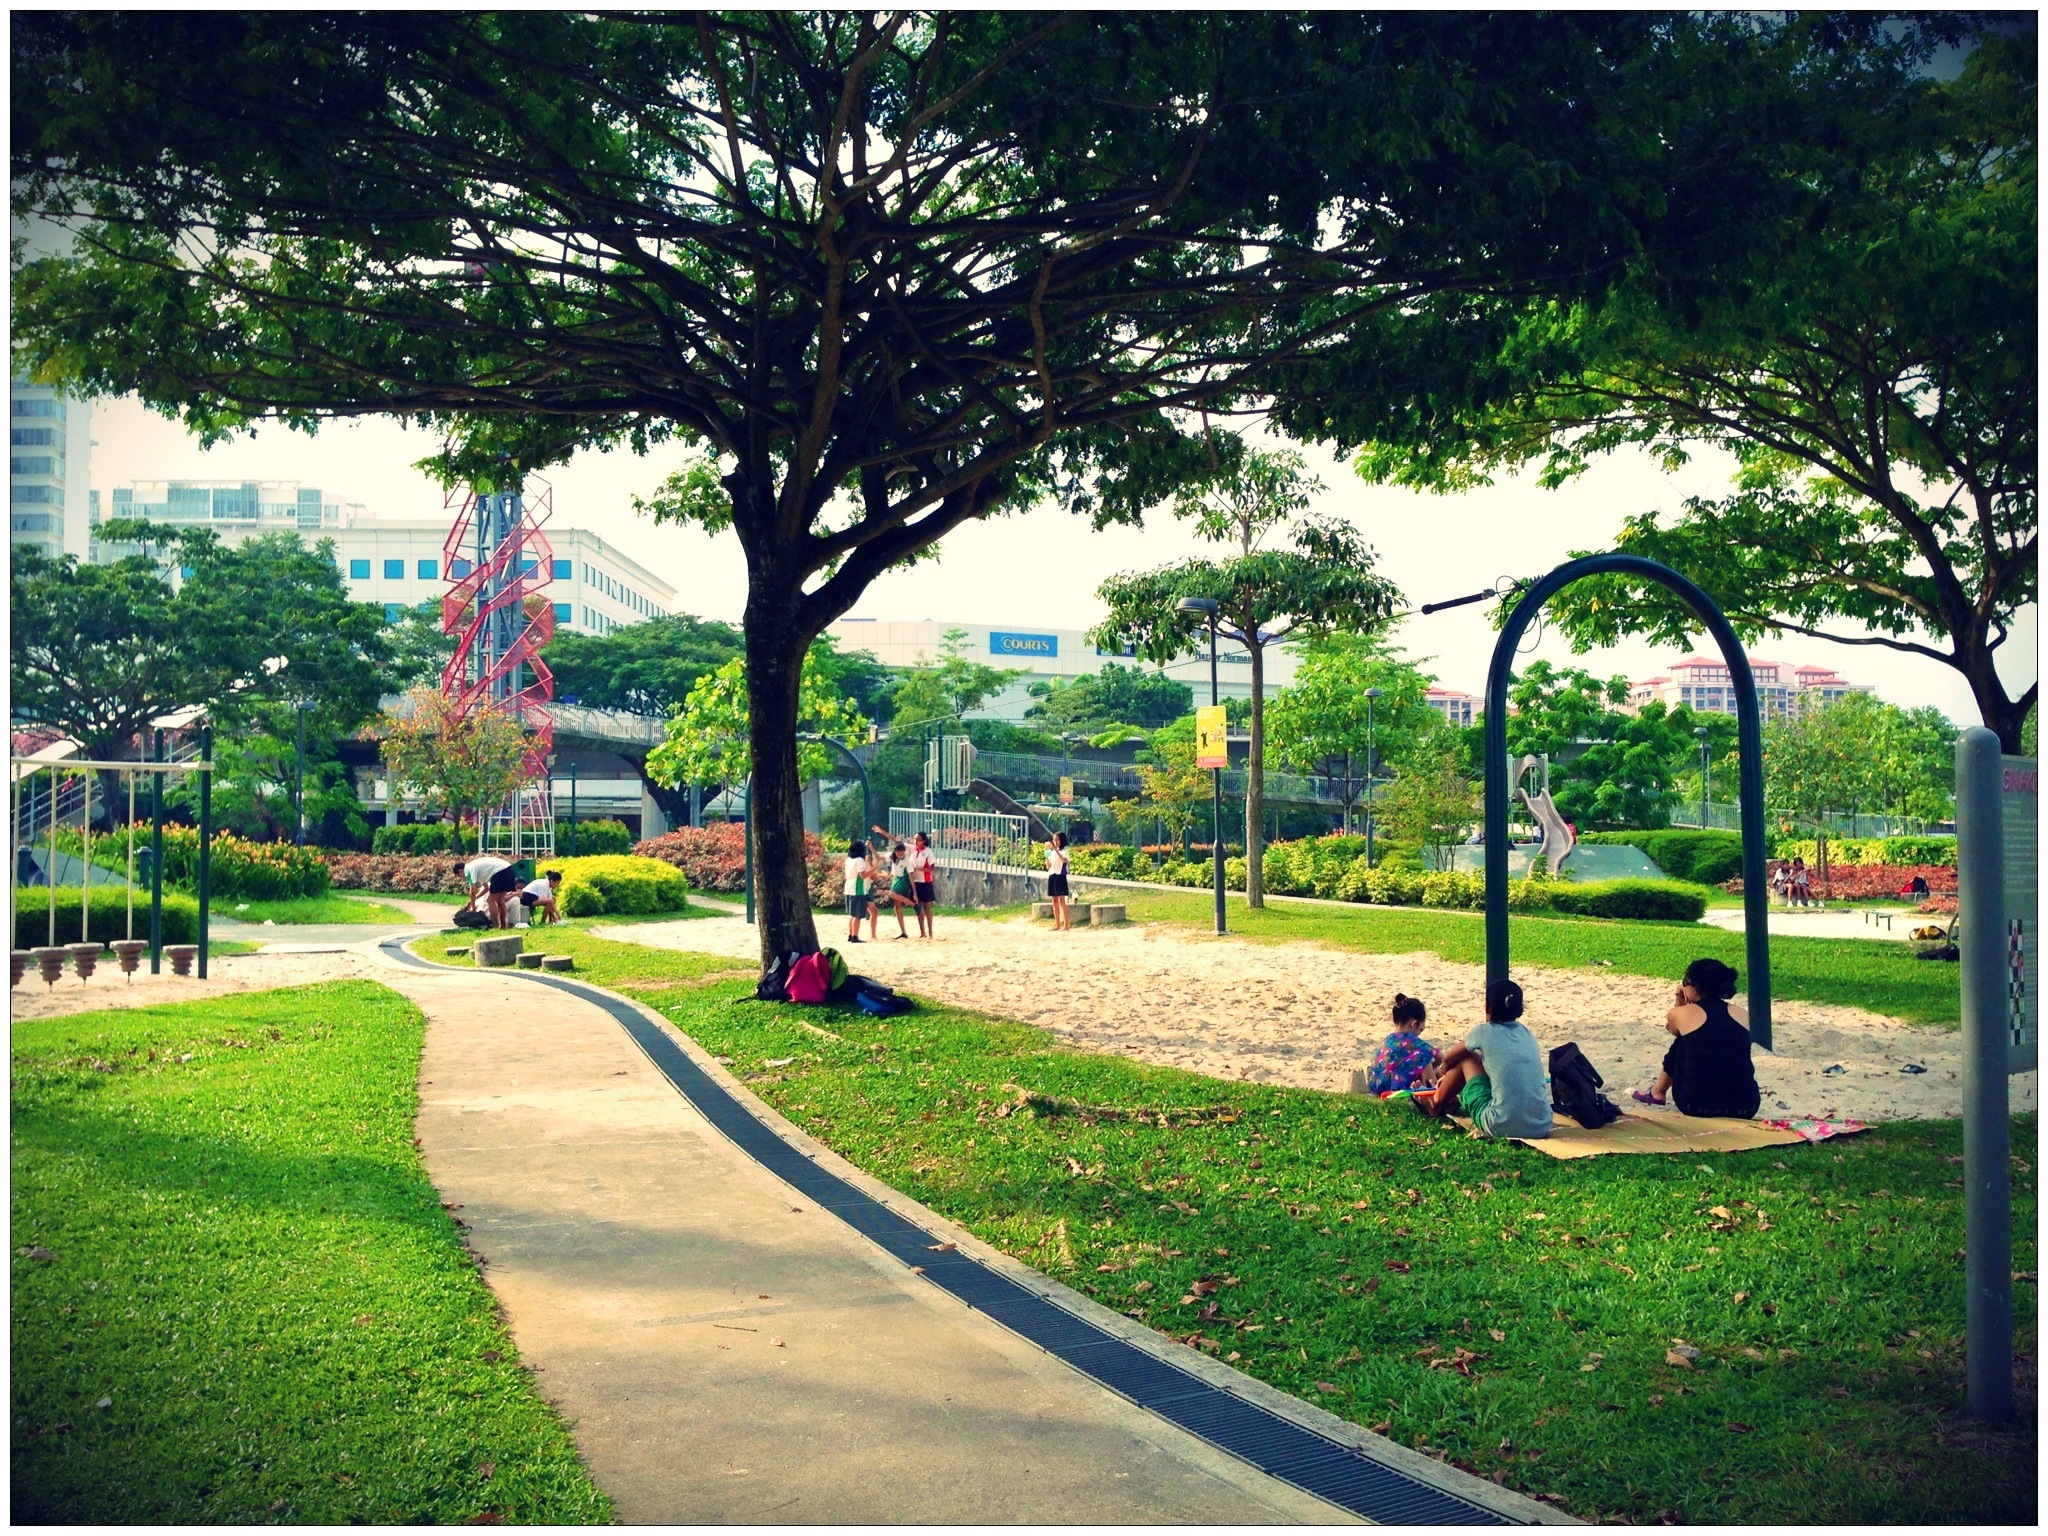 Jurong Central Park